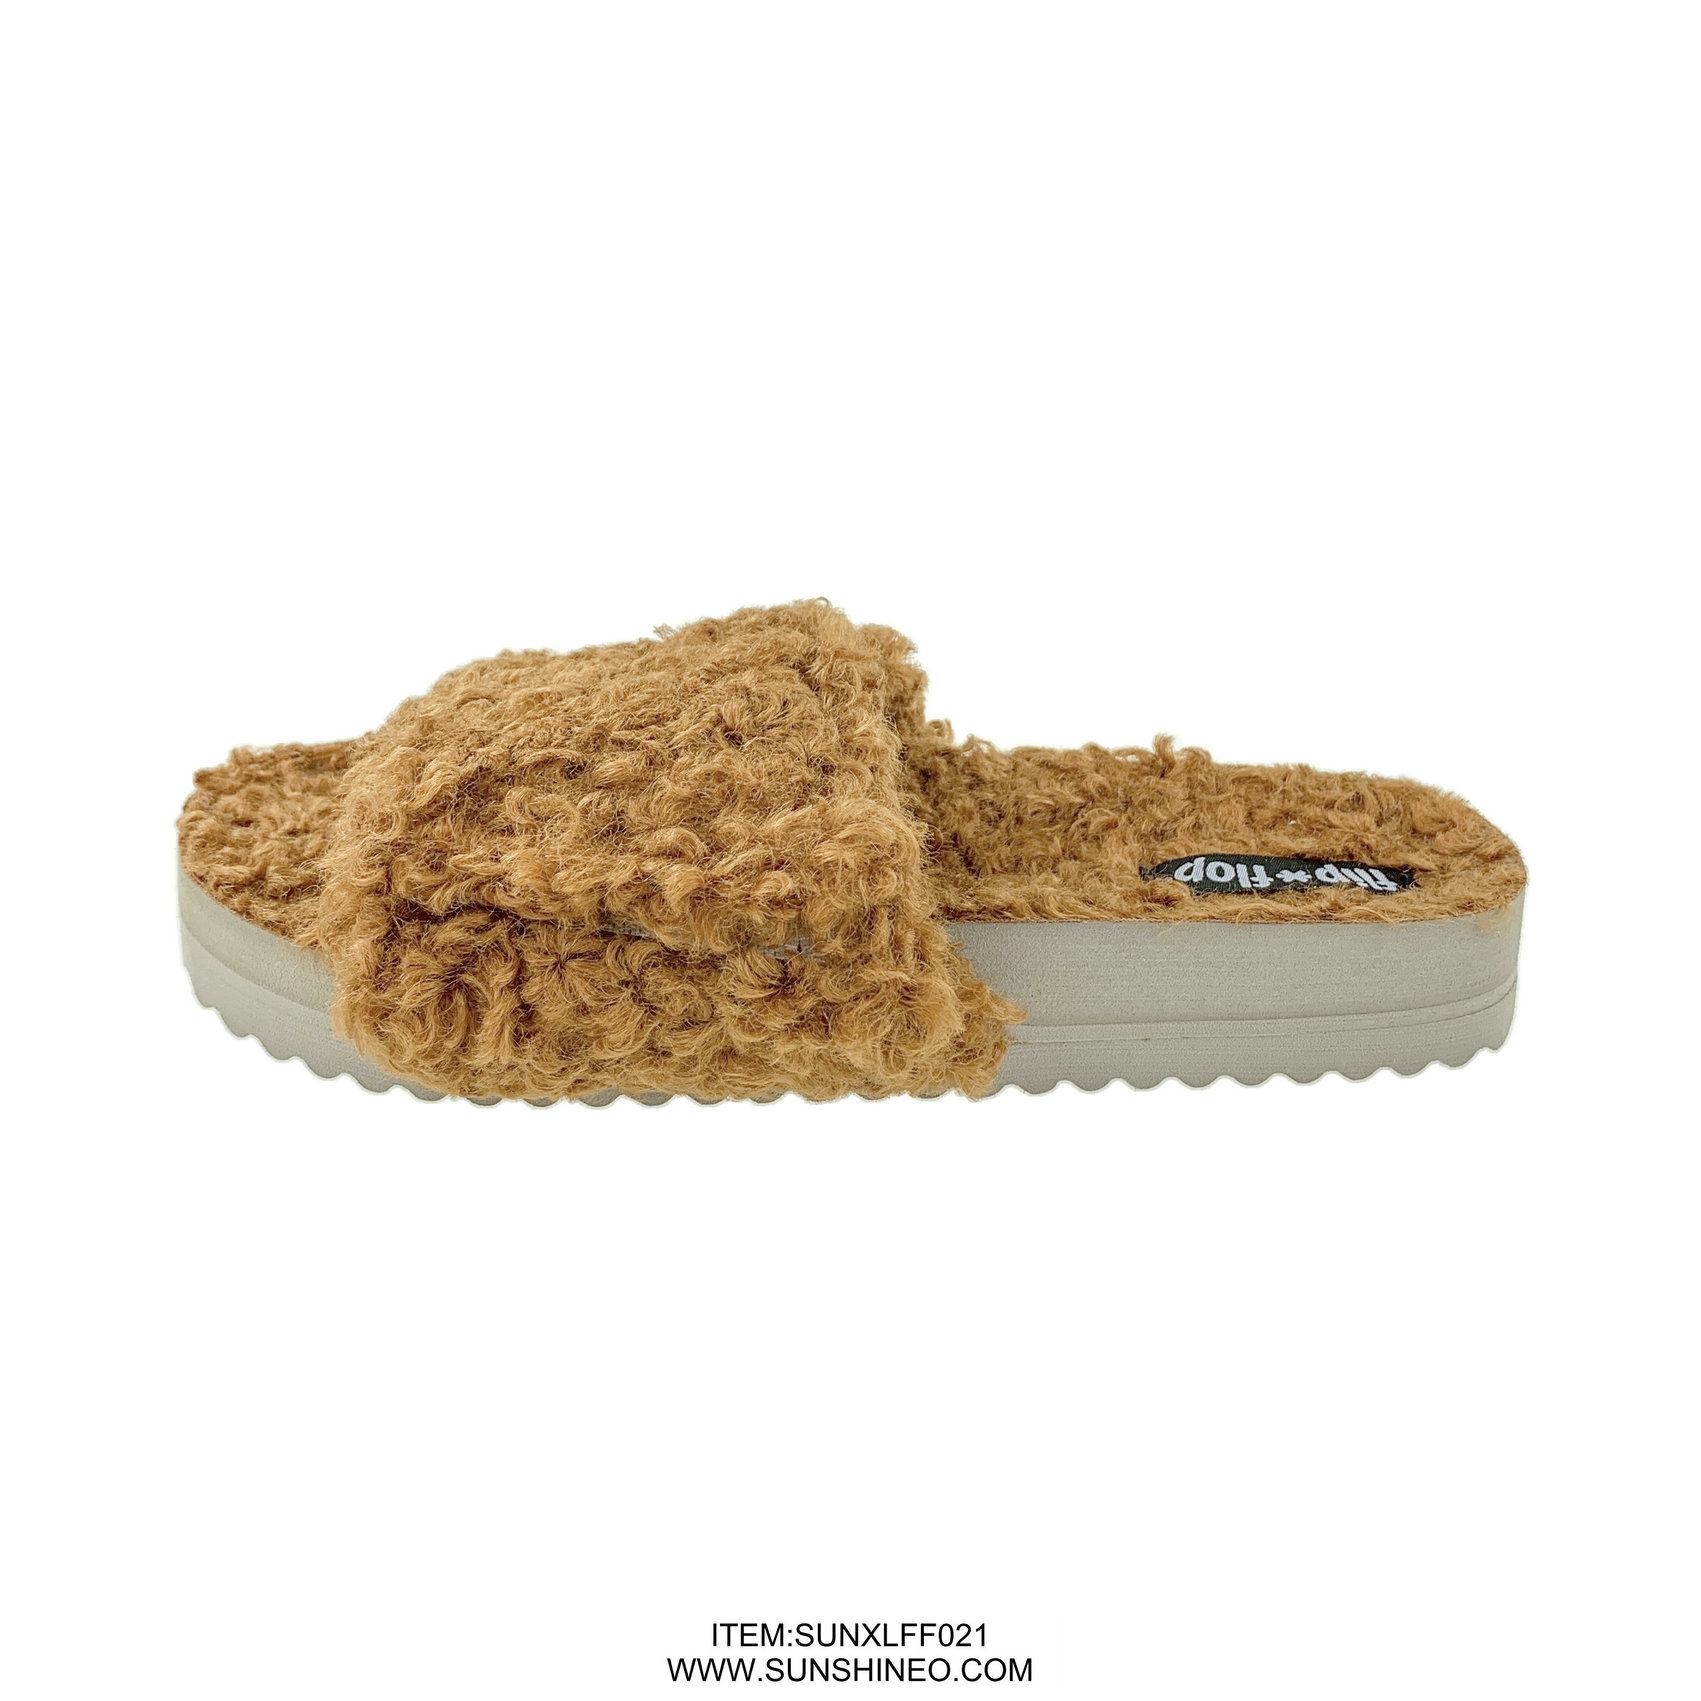 SUNXLFF021 fur flip flop sandals winter slippers